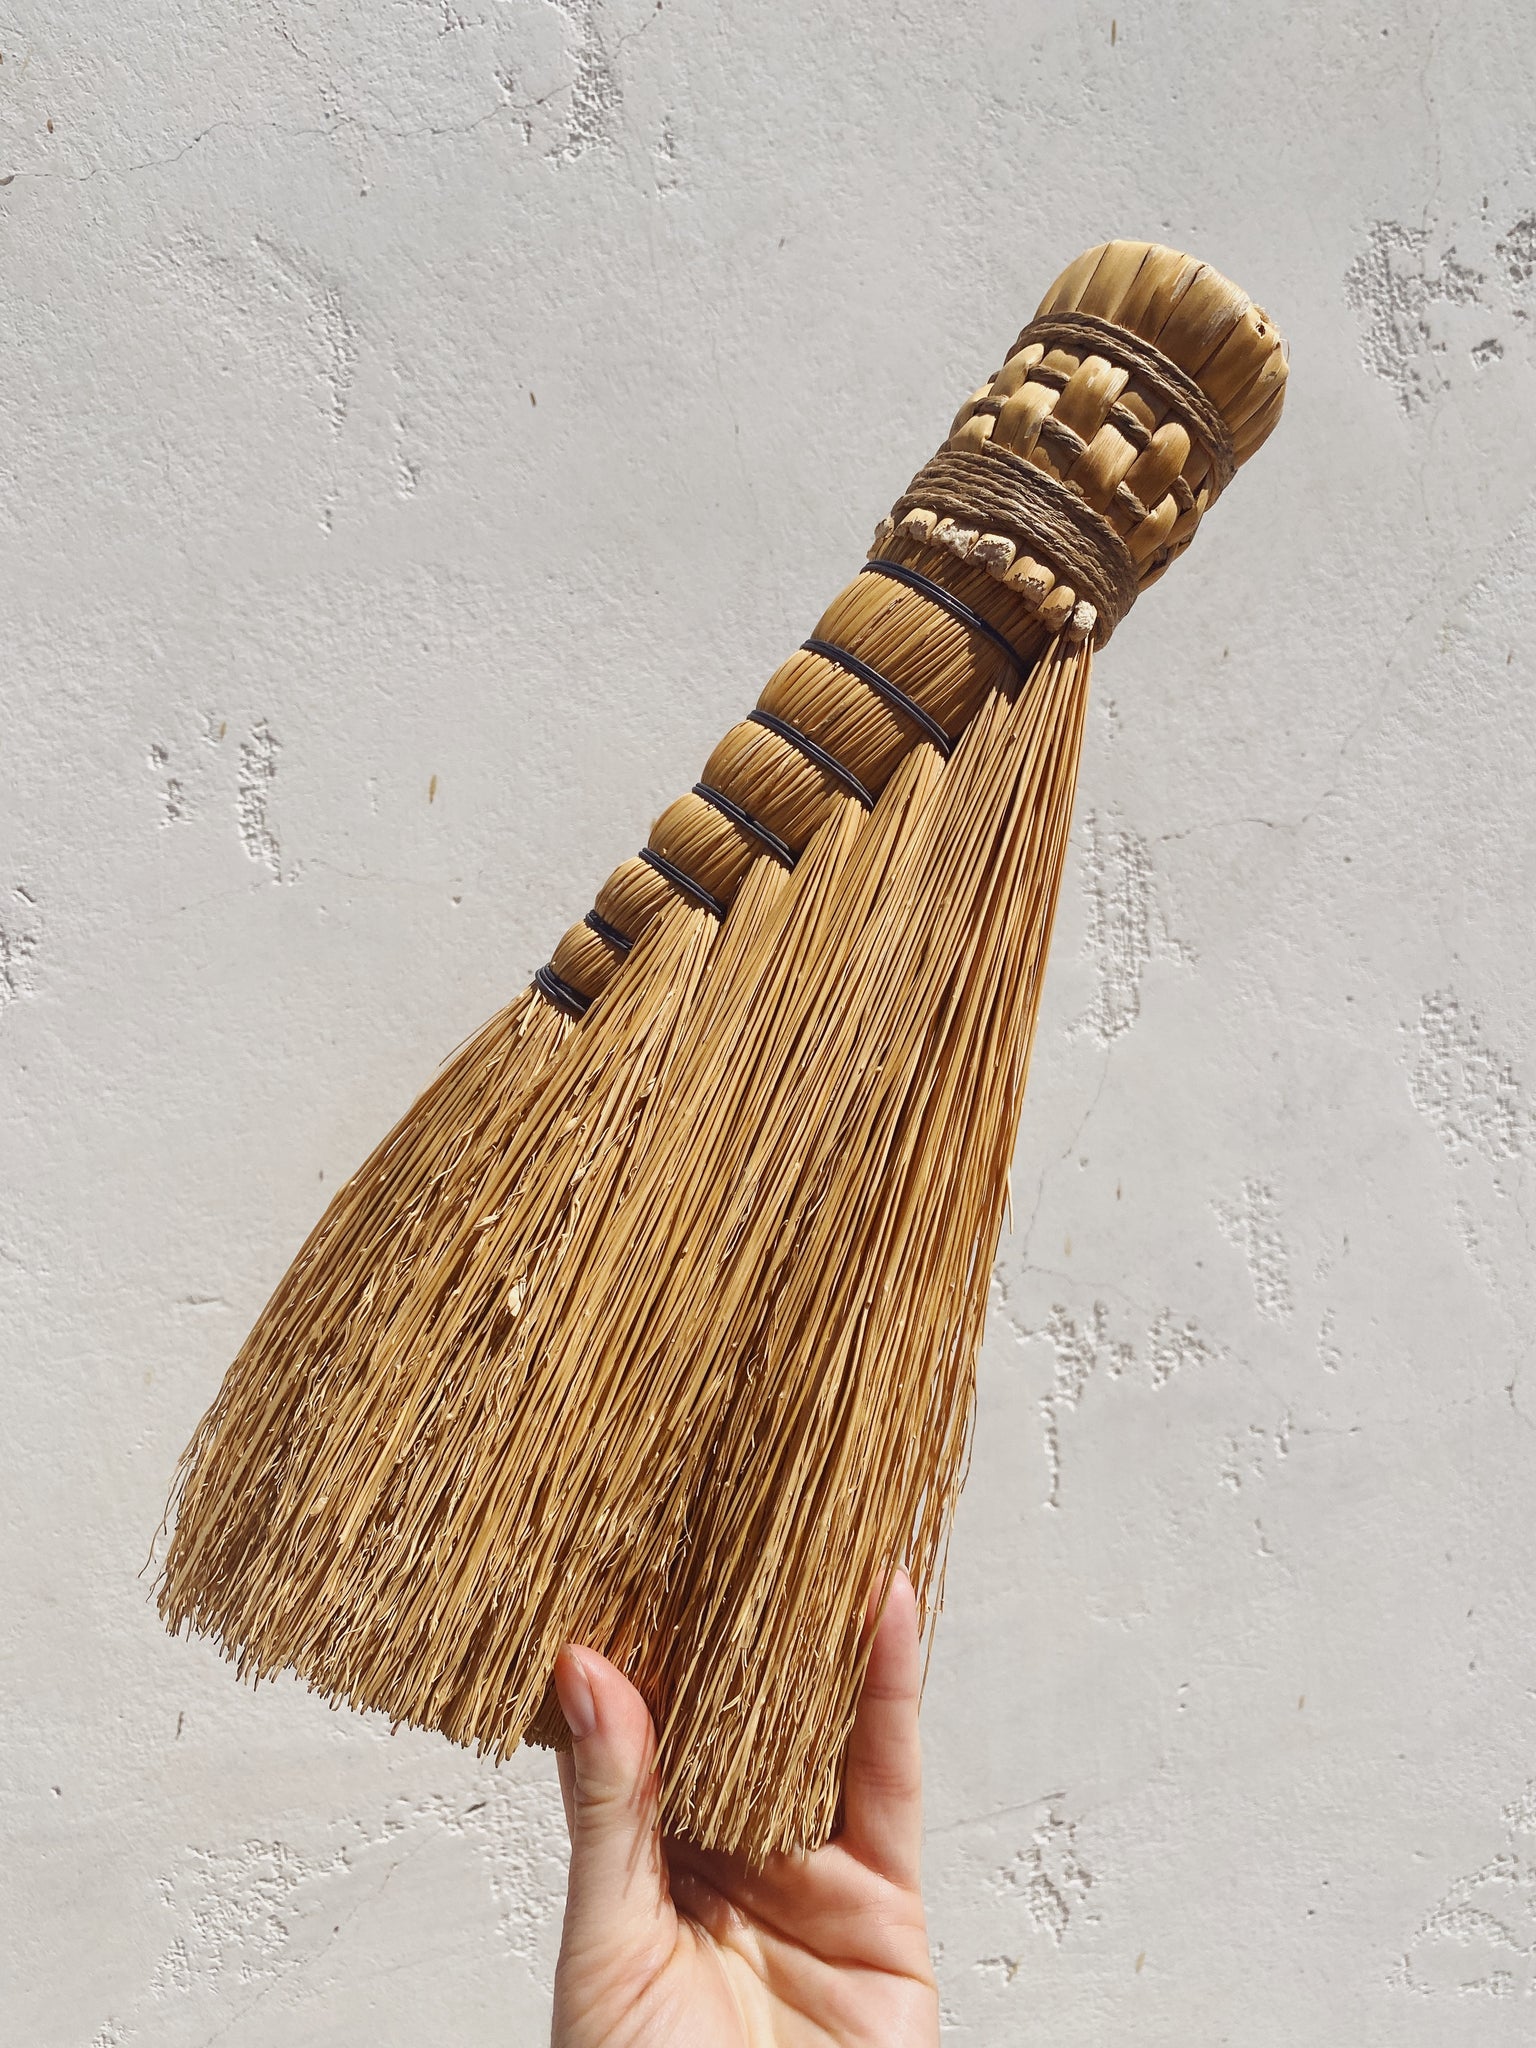 Whisk Broom Vintage Household Cleaning Tool 